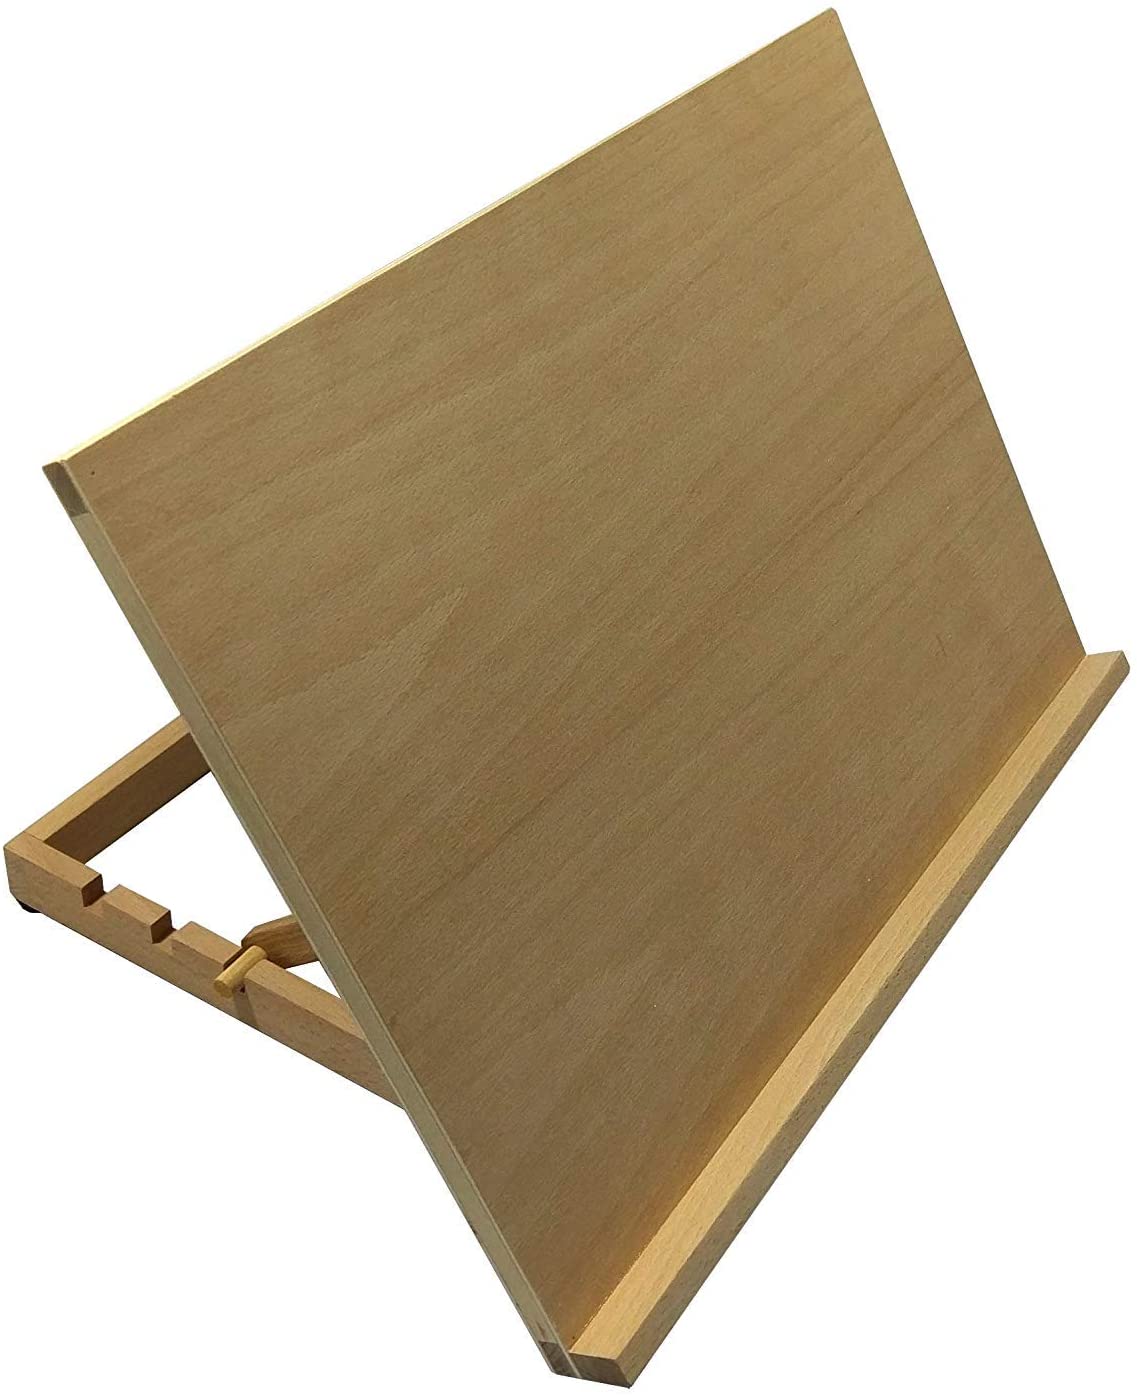 Drawing Board, Table Easel, Tabletop Easel A3 Wood Desktop